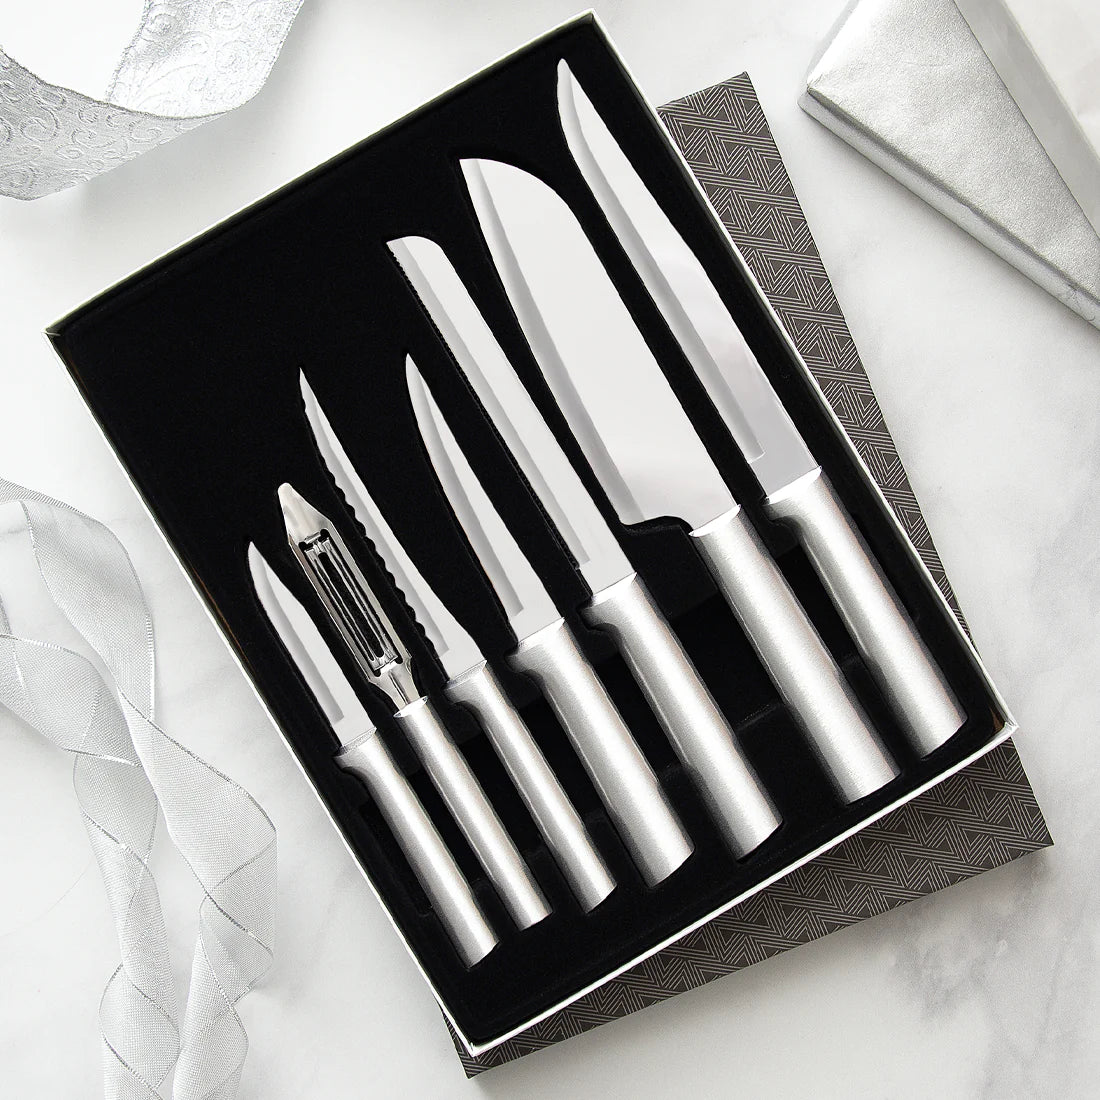 RADA Cutlery - The Starter Gift Set